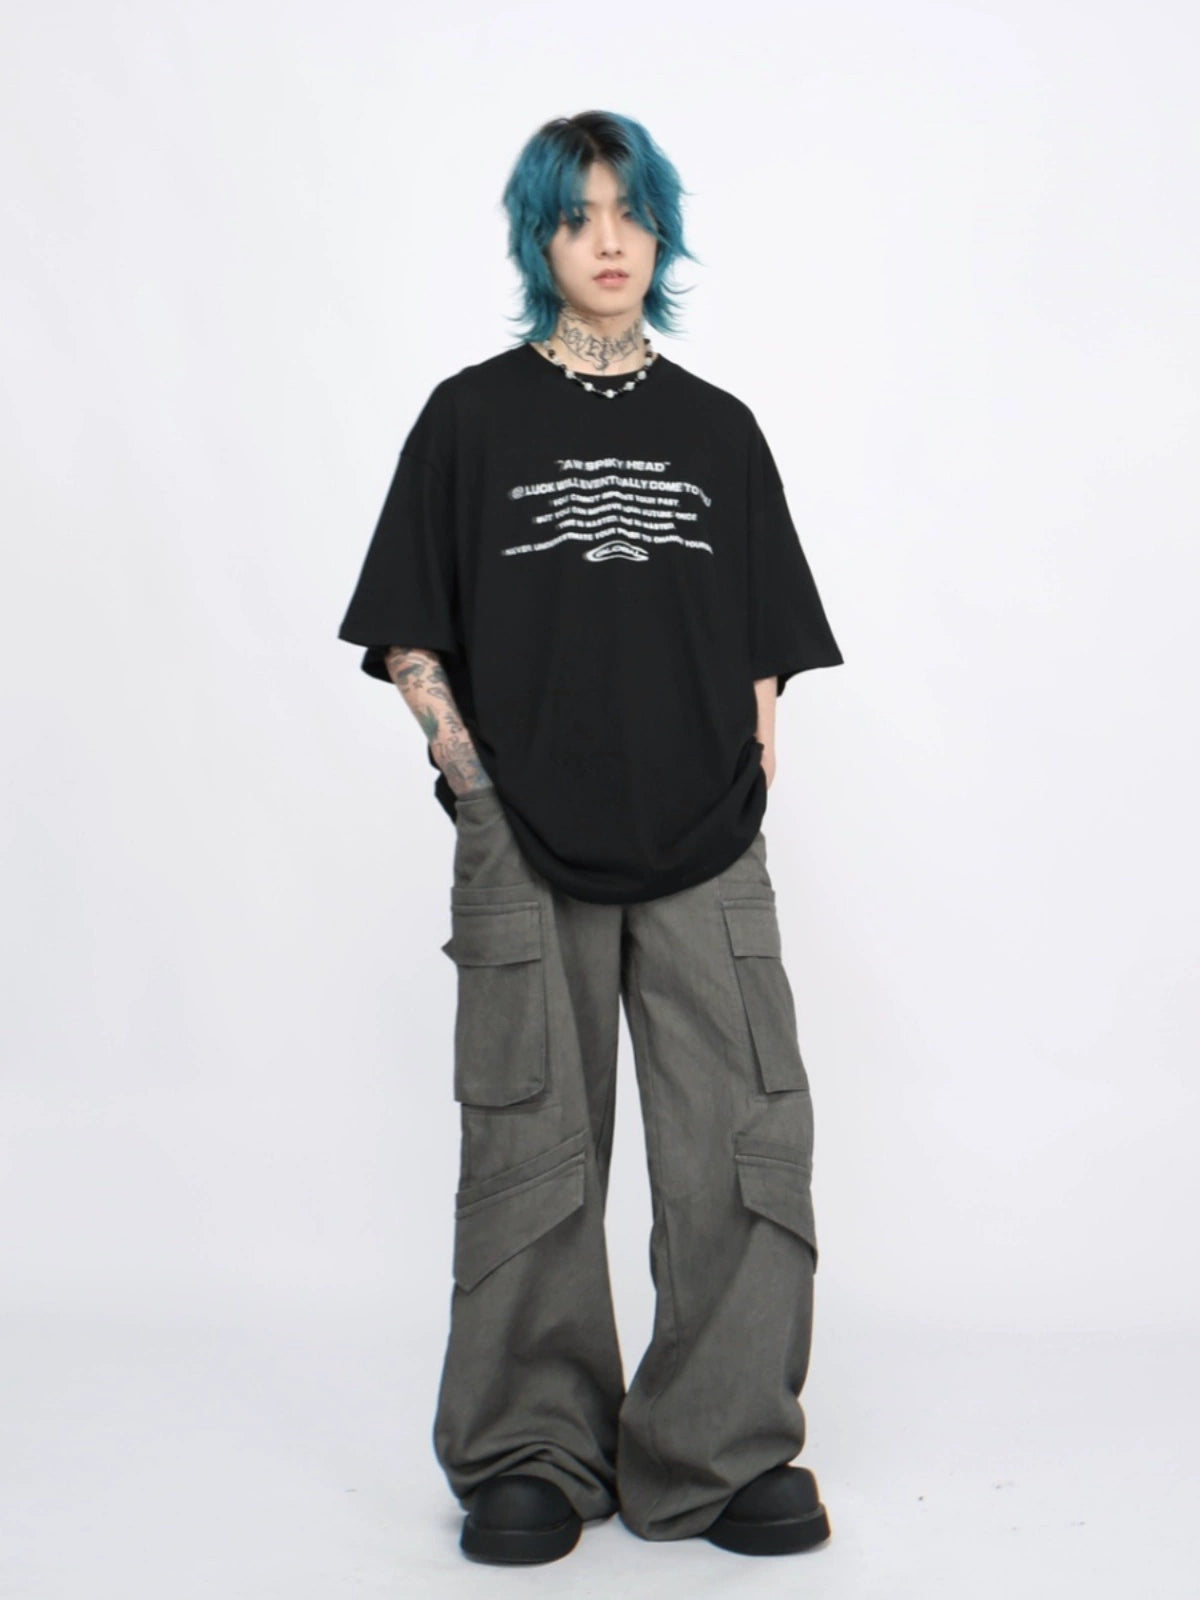 Print Oversize Short Sleeve T-Shirt WN5880